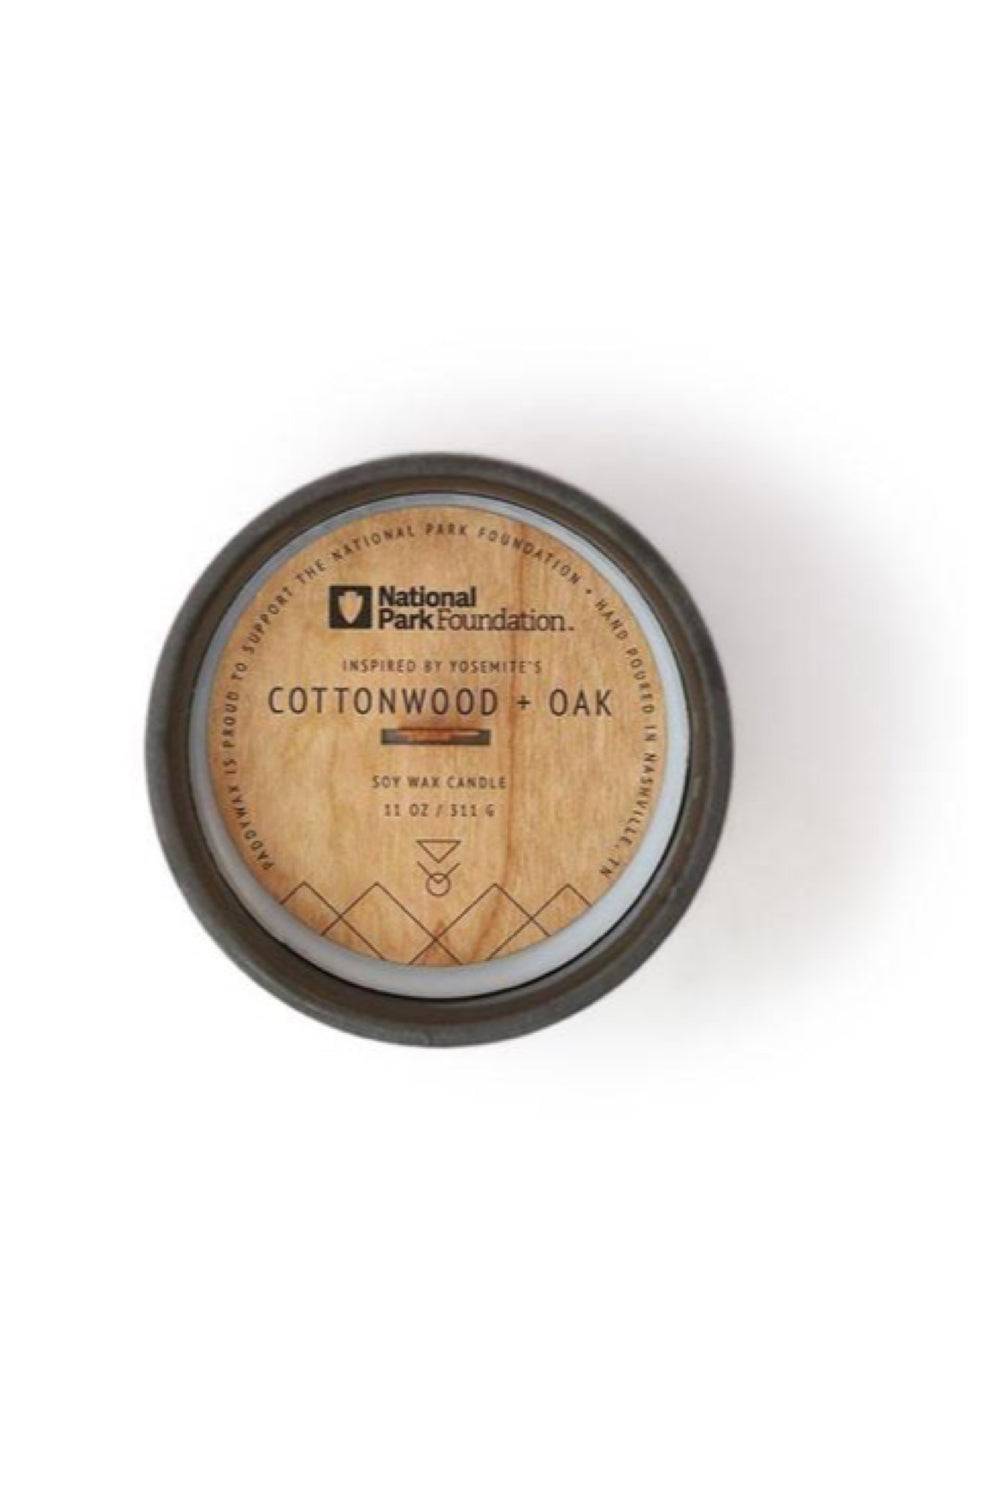 Cottonwood + Oak Parks Candle